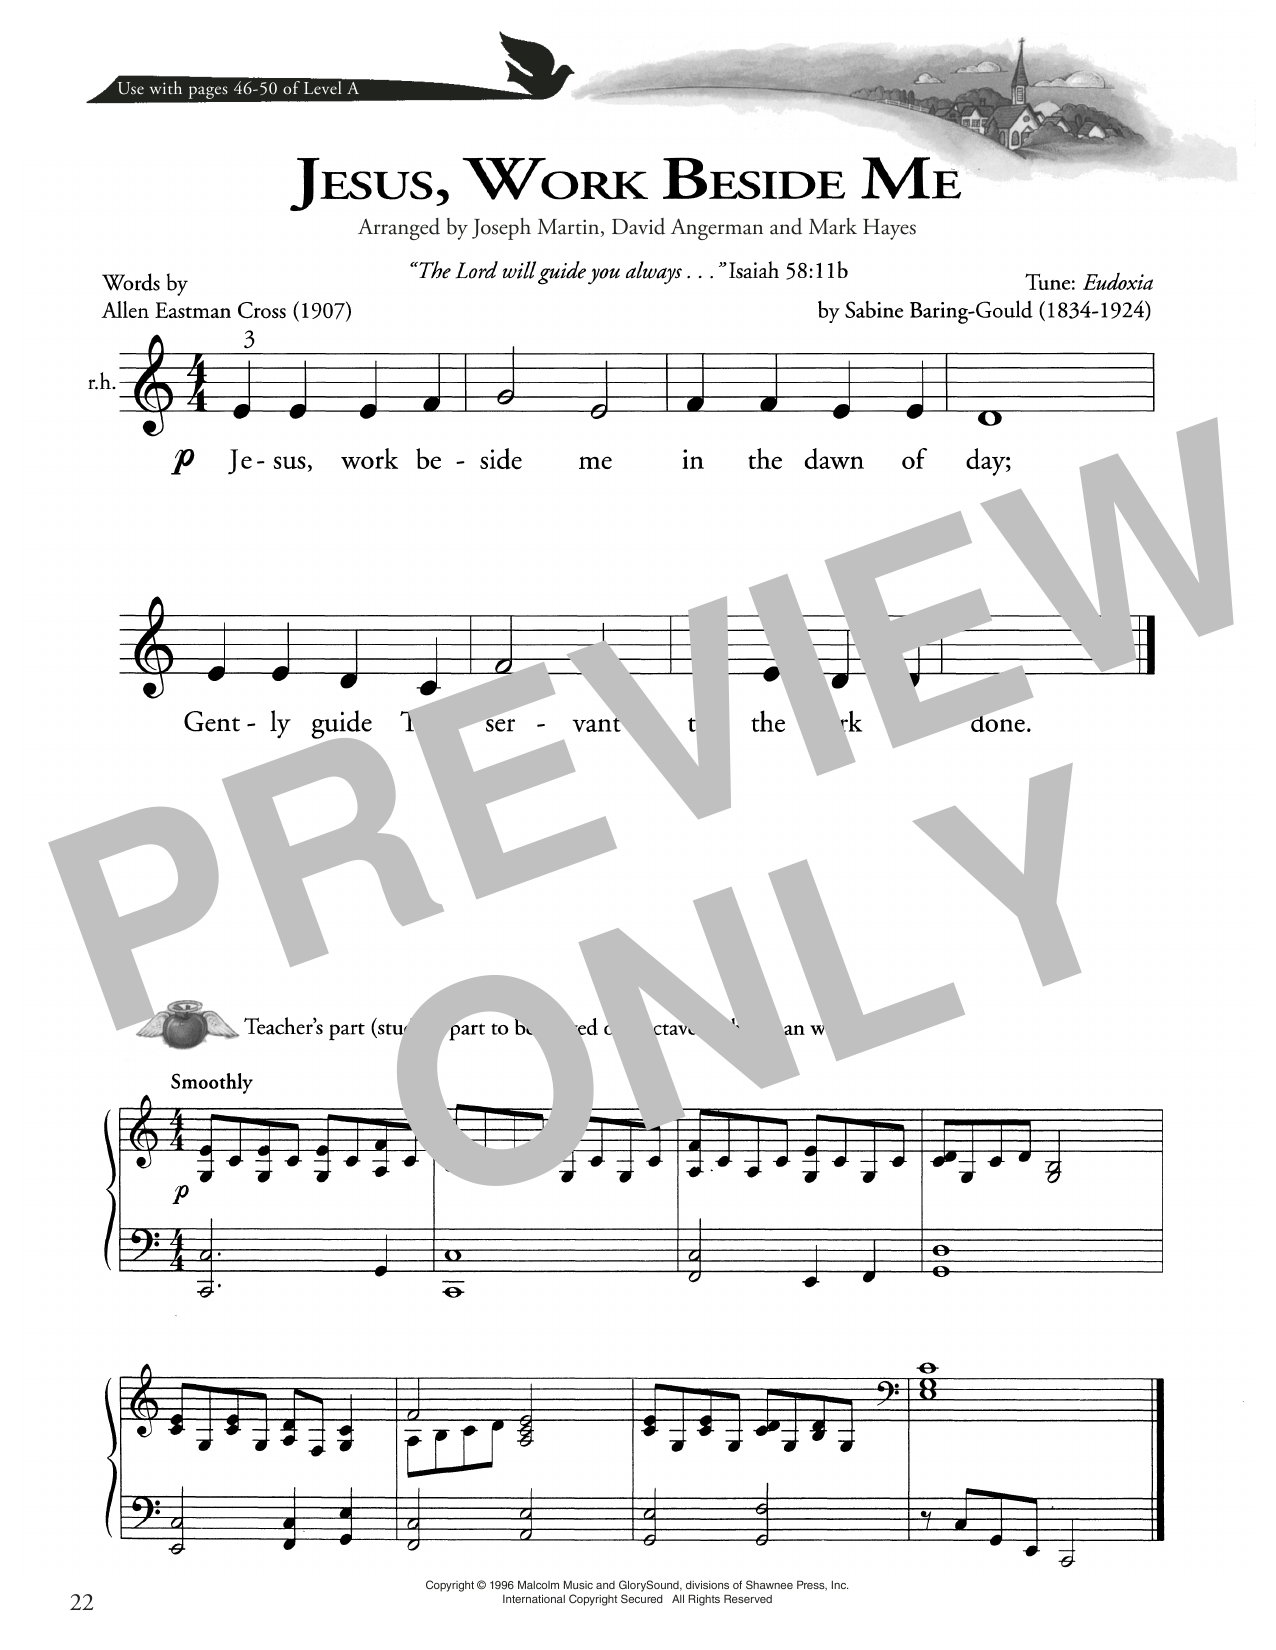 Download Allen Eastman Cross Jesus, Work Beside Me Sheet Music and learn how to play Piano Method PDF digital score in minutes